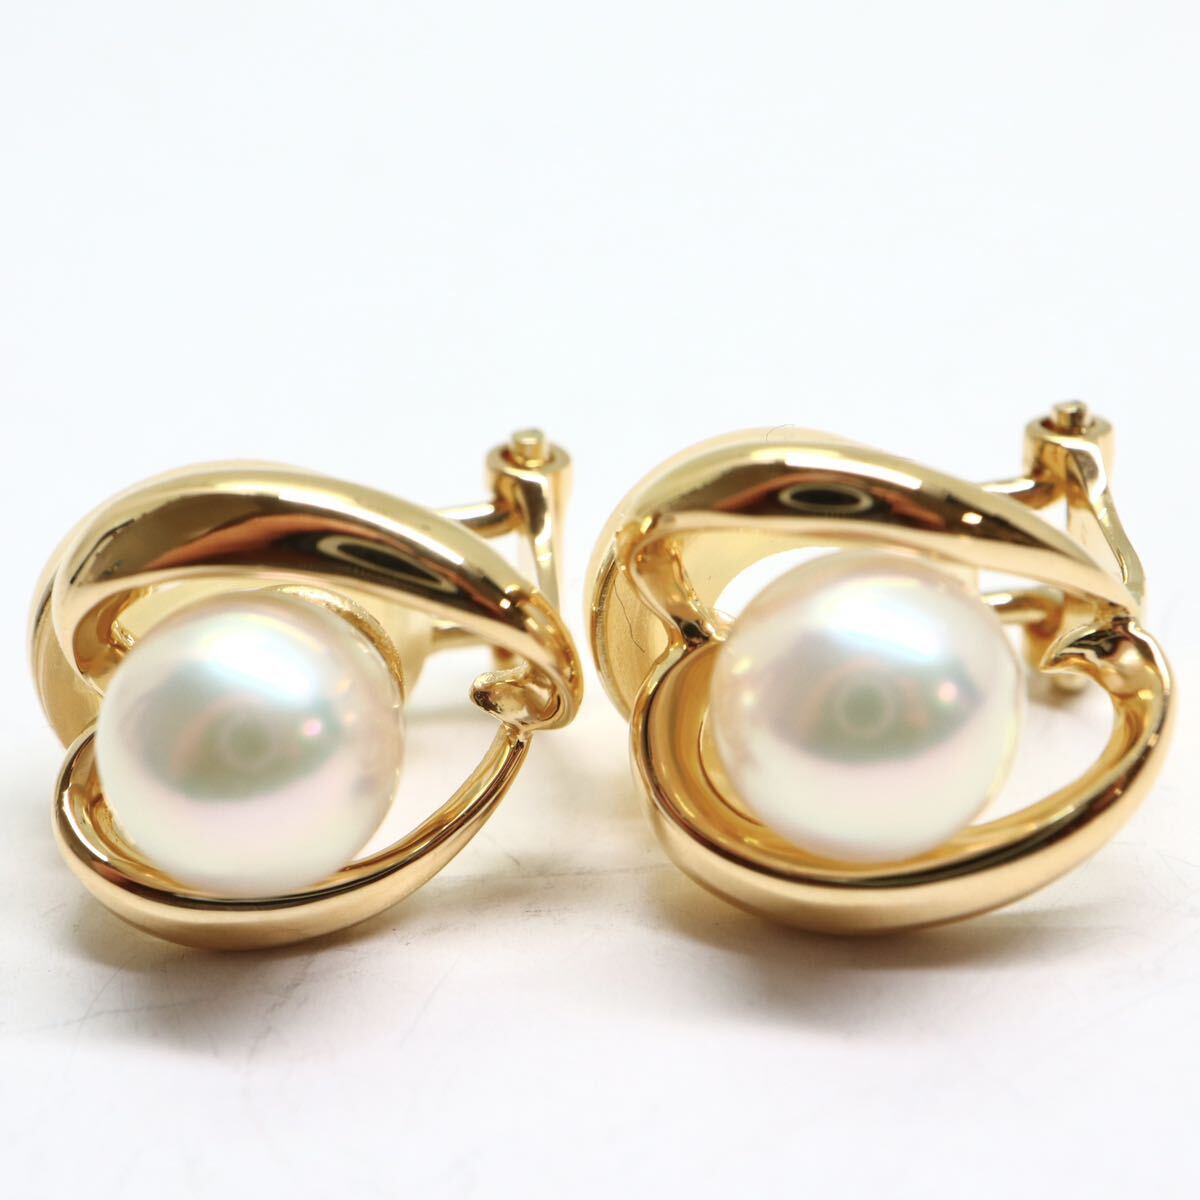 POLA jewelry(ポーラジュエリー)テリ良し!!《K18 アコヤ本真珠イヤリング》A 4.6g 約6.5mm珠 pearl パール earring pierce jewelry EC0/EC0の画像2